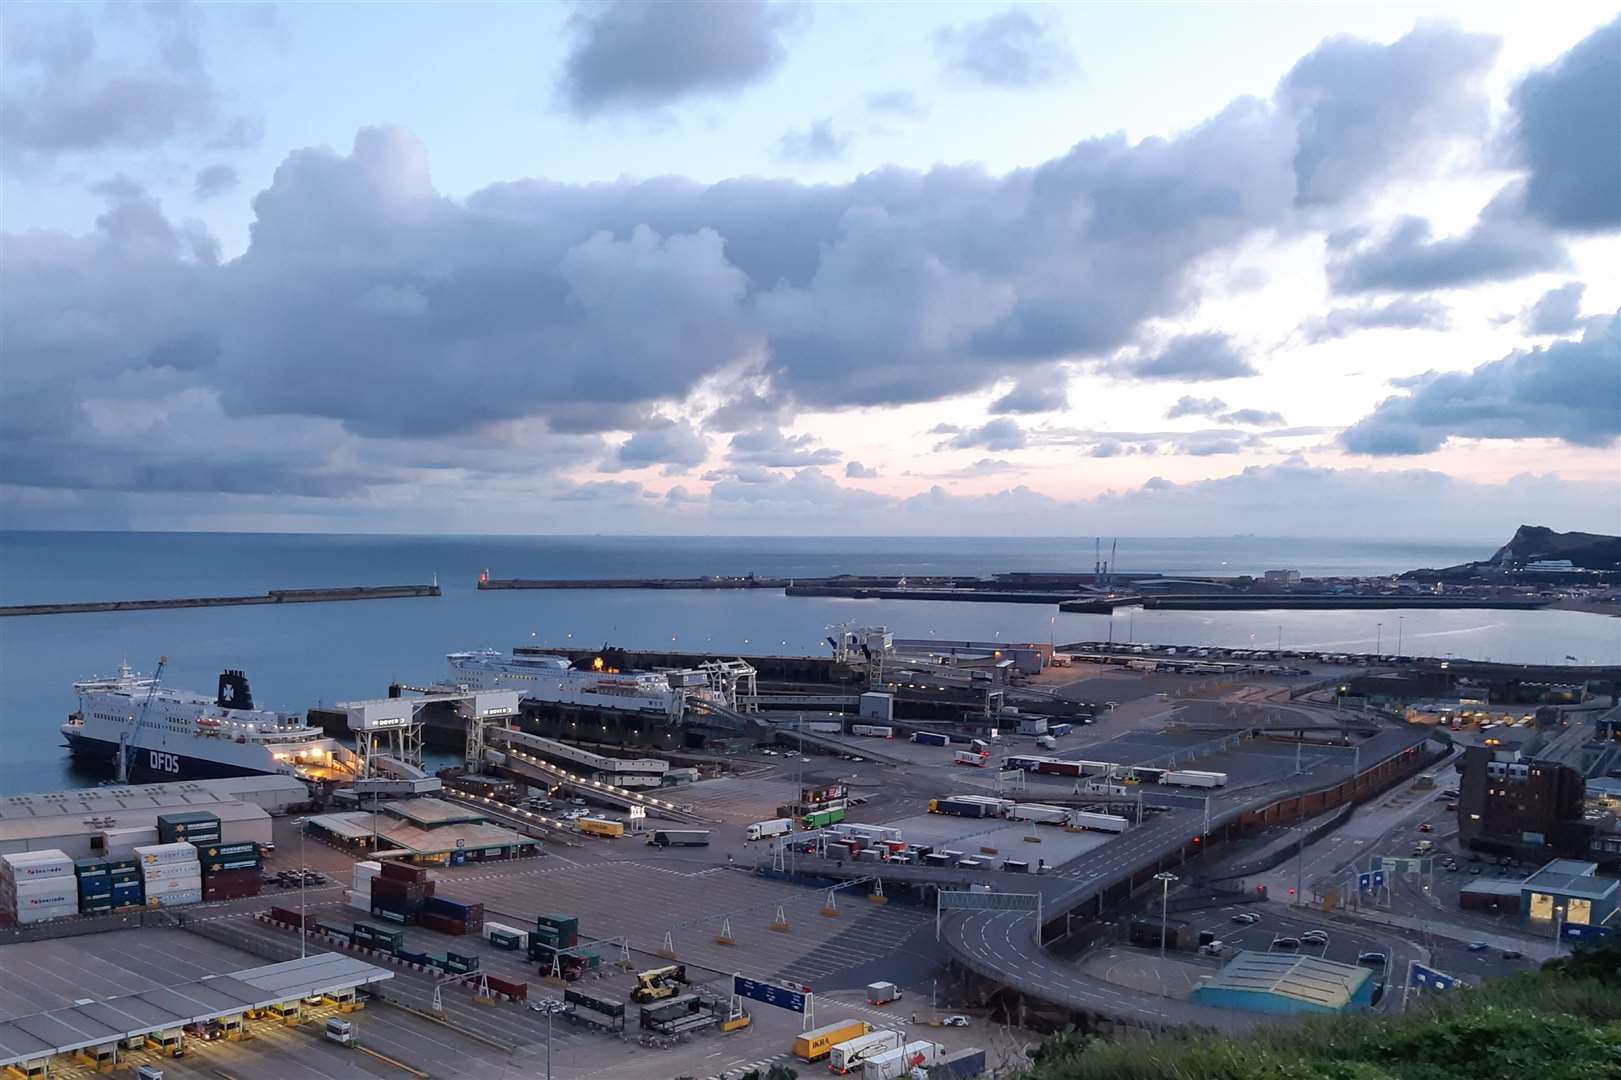 Dover Eastern Docks where 58 migrants were found dead in 2000